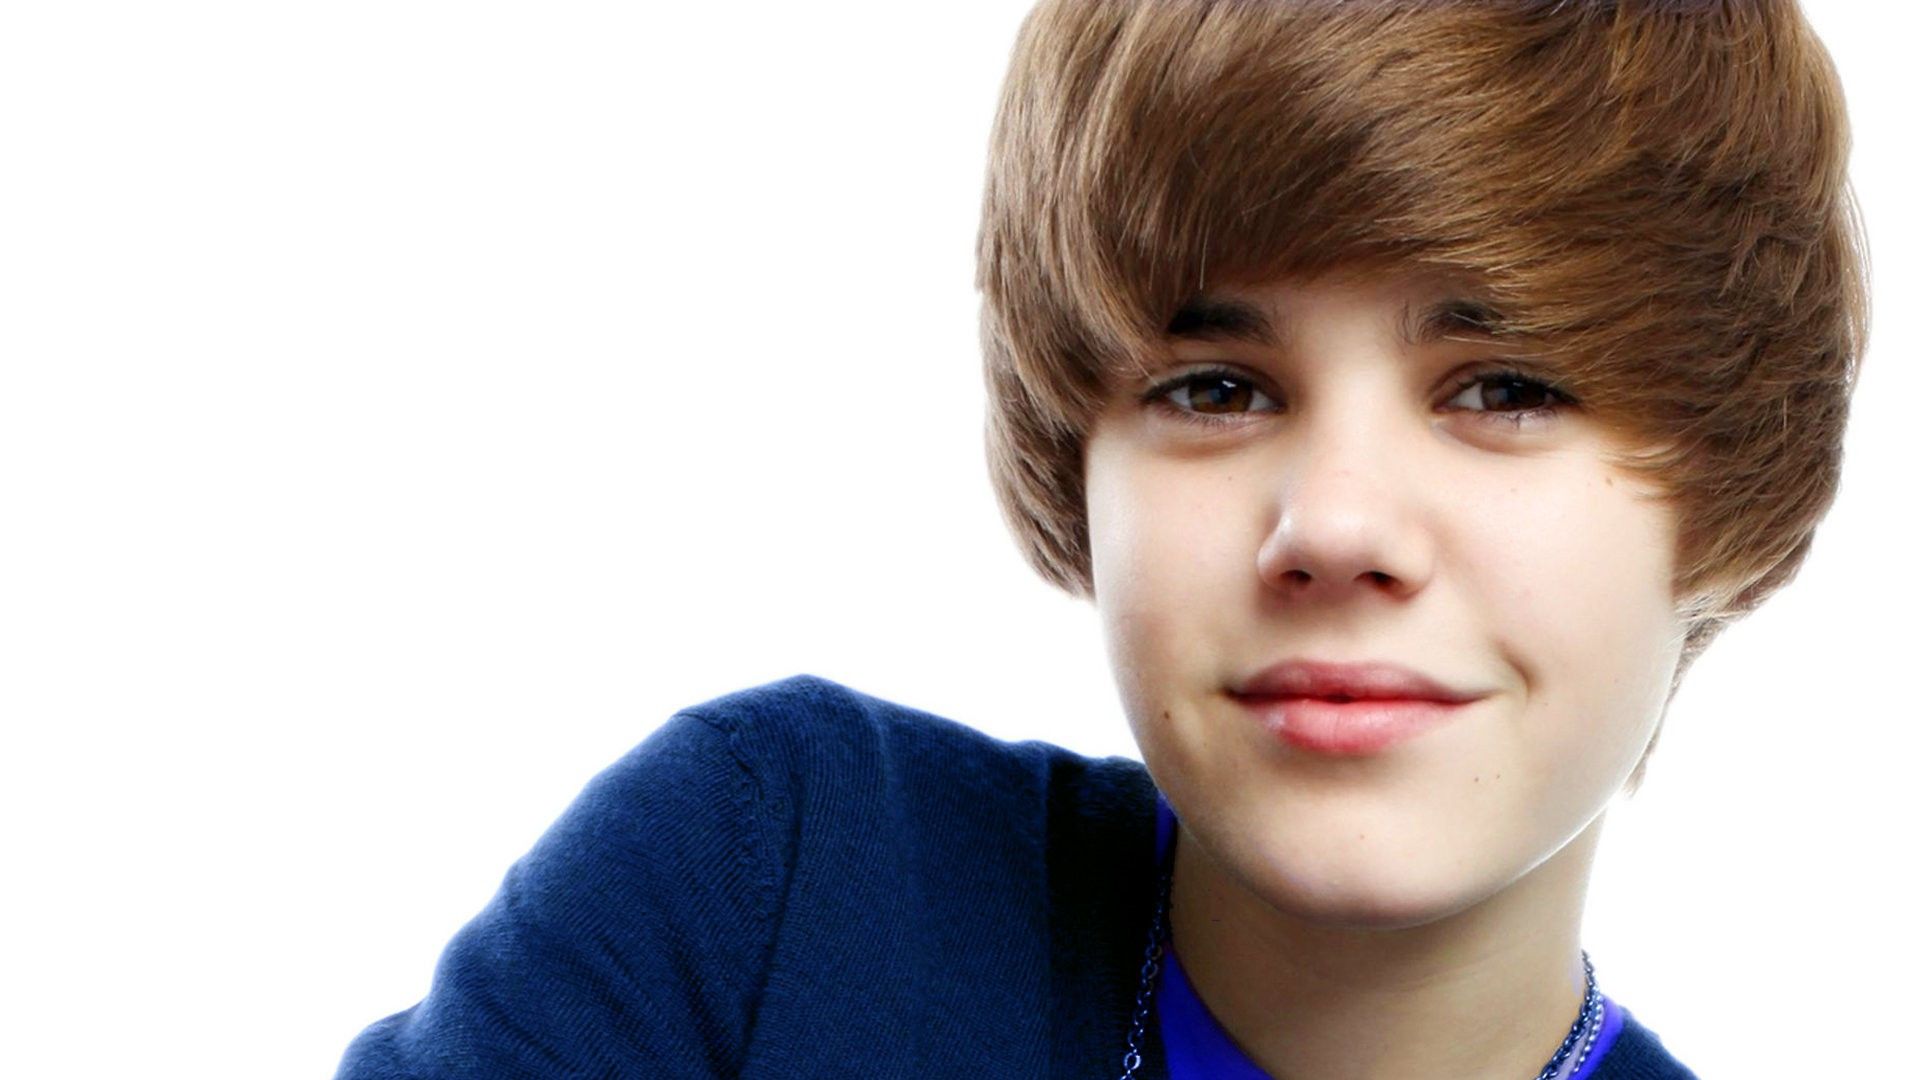 Cute Justin Bieber Wallpaper